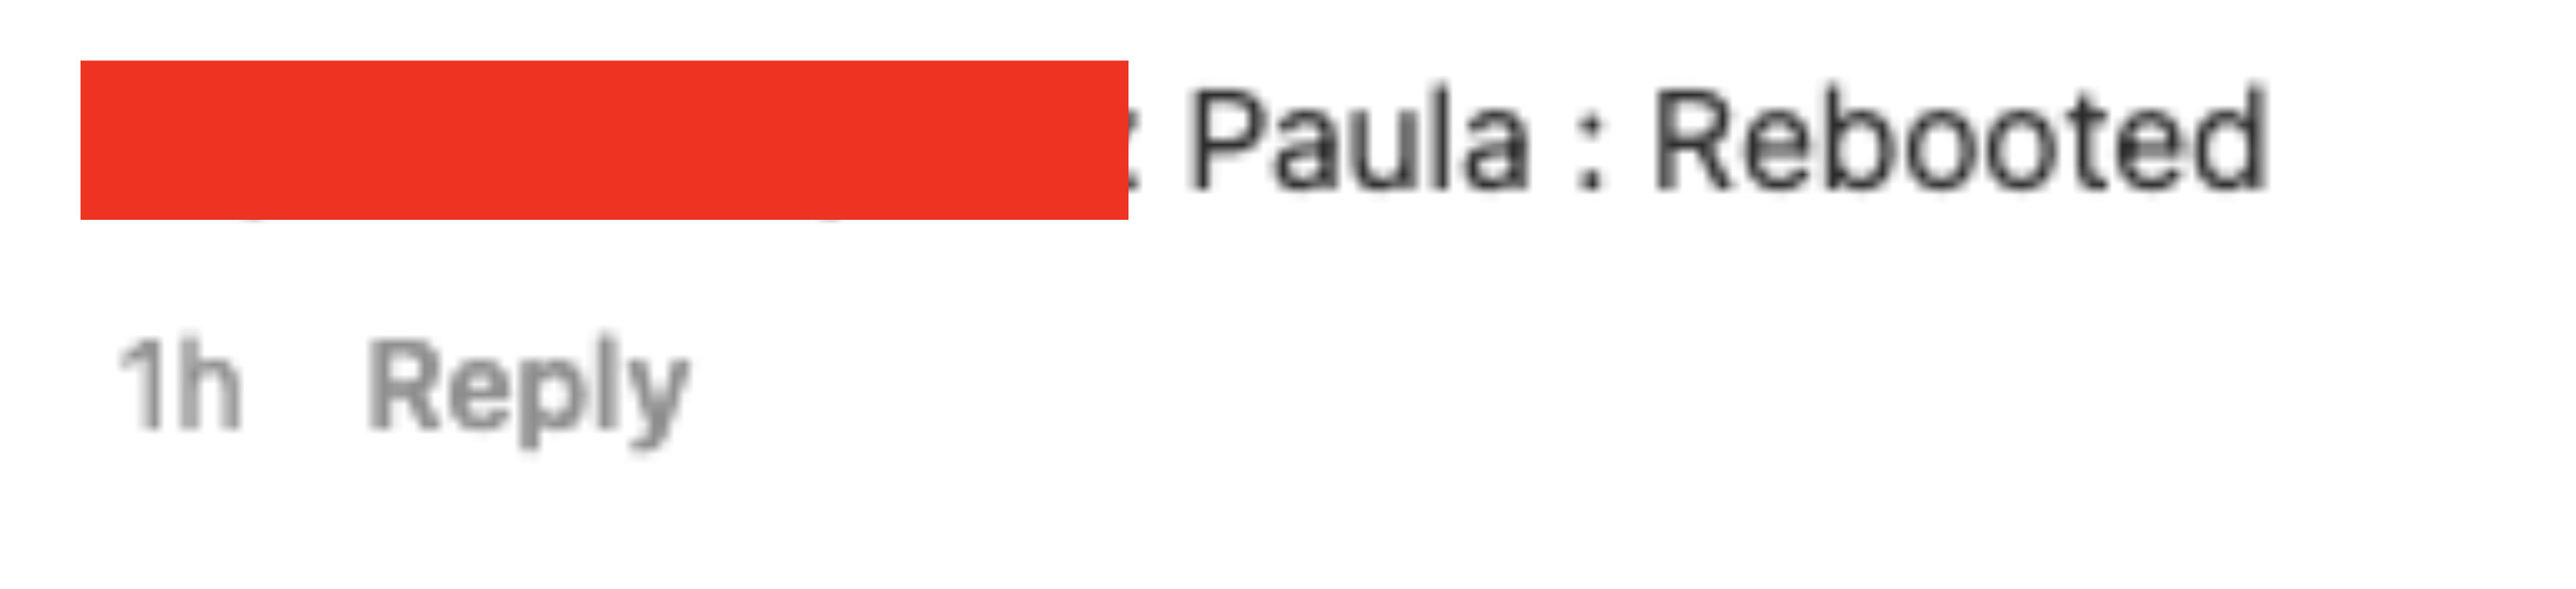 Paula: rebooted